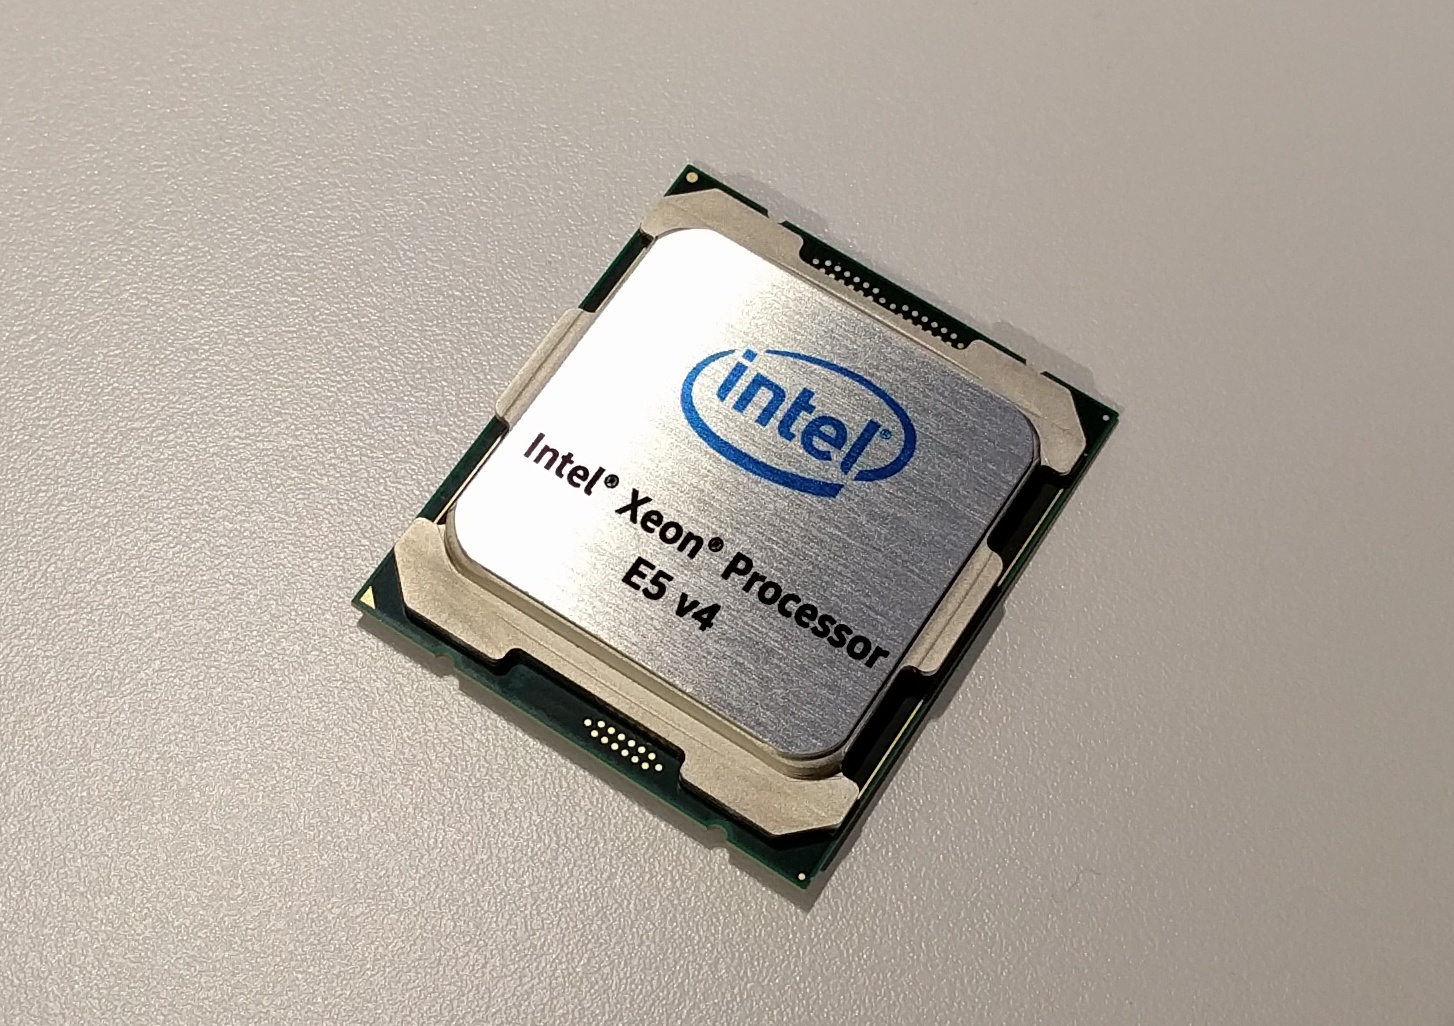 Cpu 16 cores. Процессор Intel Xeon e5-2699v4. Xeon e7 8890 v4. Xeon e7-8894 v4. Intel Xeon e5-2600.